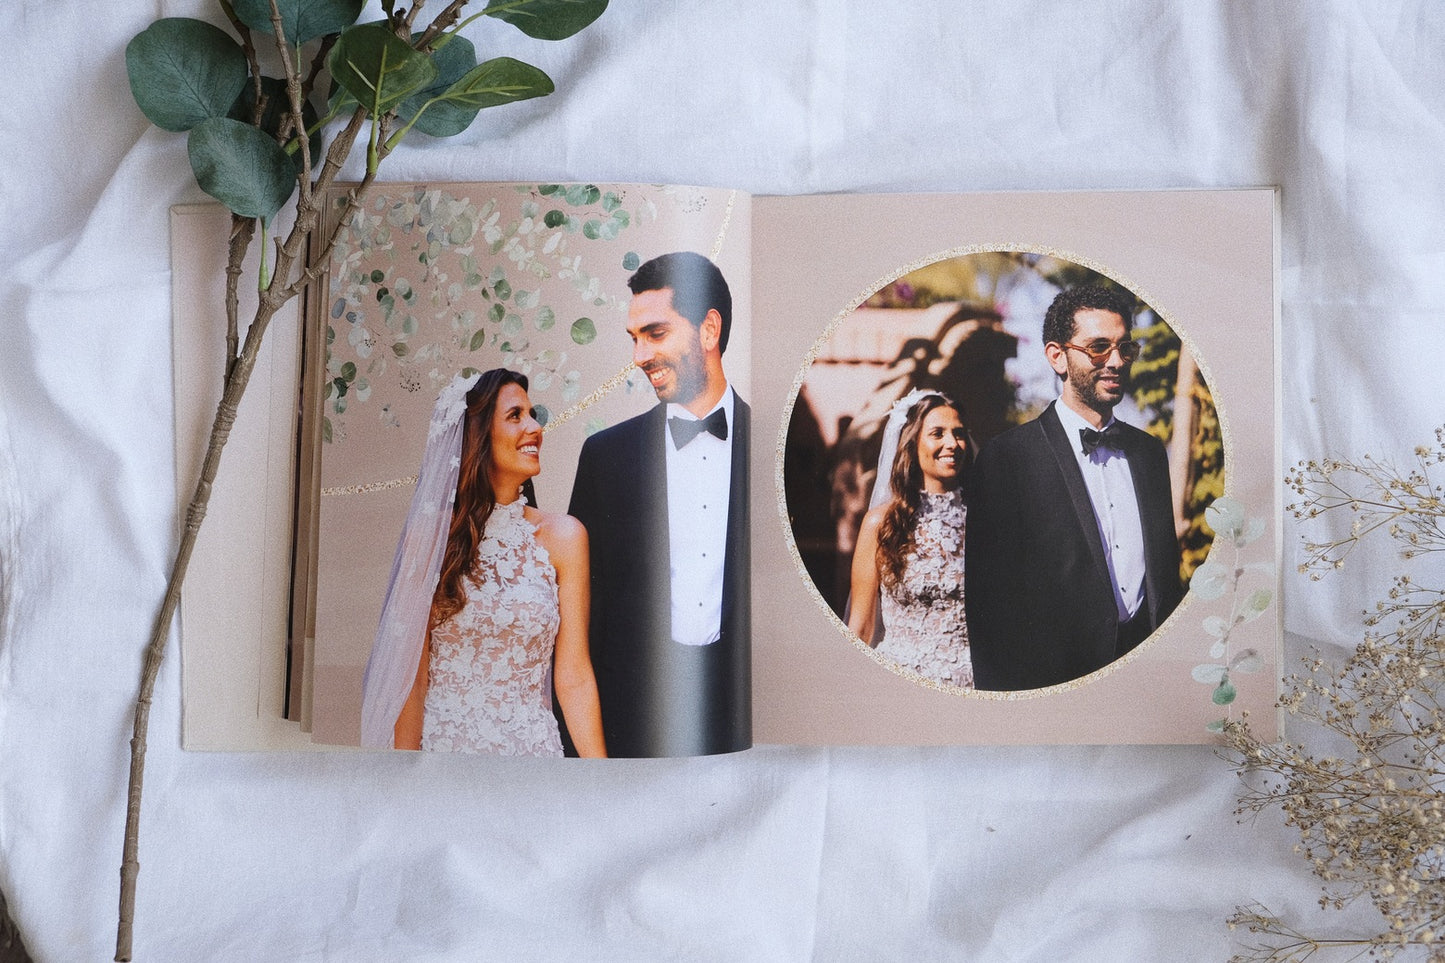 The Customized Wedding Book